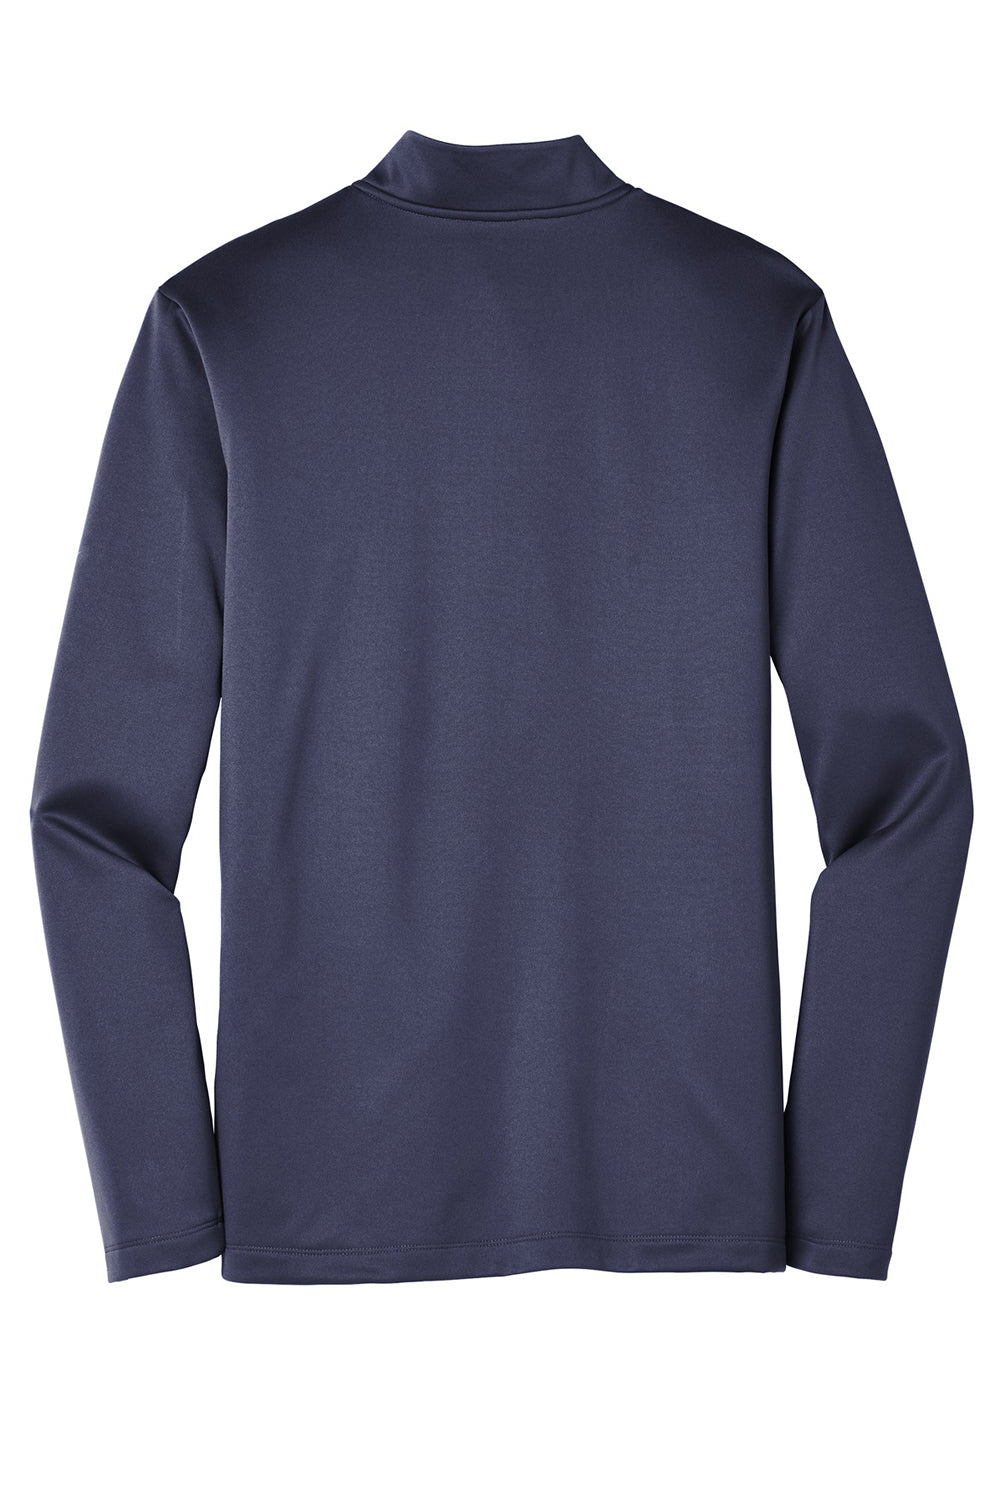 Nike NKAH6418 Mens Therma-Fit Moisture Wicking Fleece Full Zip Sweatshirt Midnight Navy Blue Flat Back